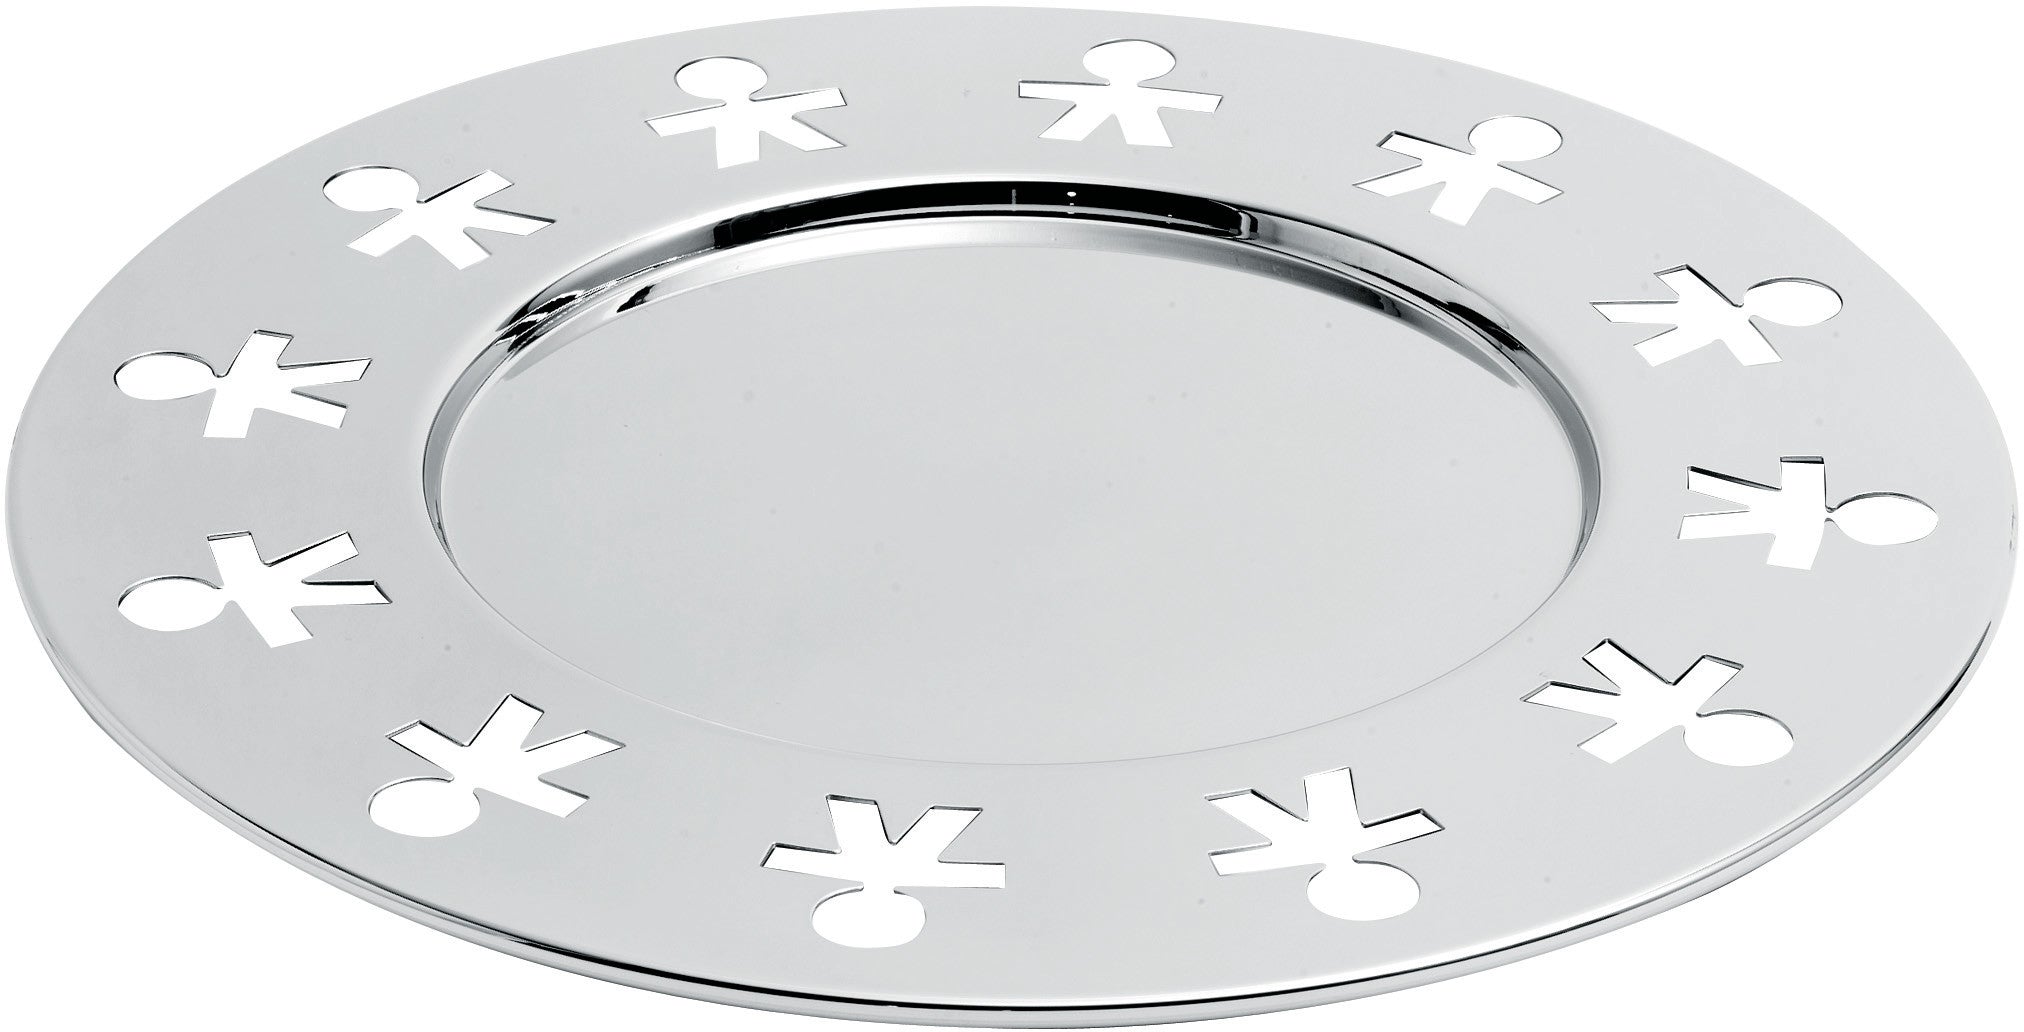 AKK11 Girotondo tray with open-work edge in 18/10 stainless steel mirror polished